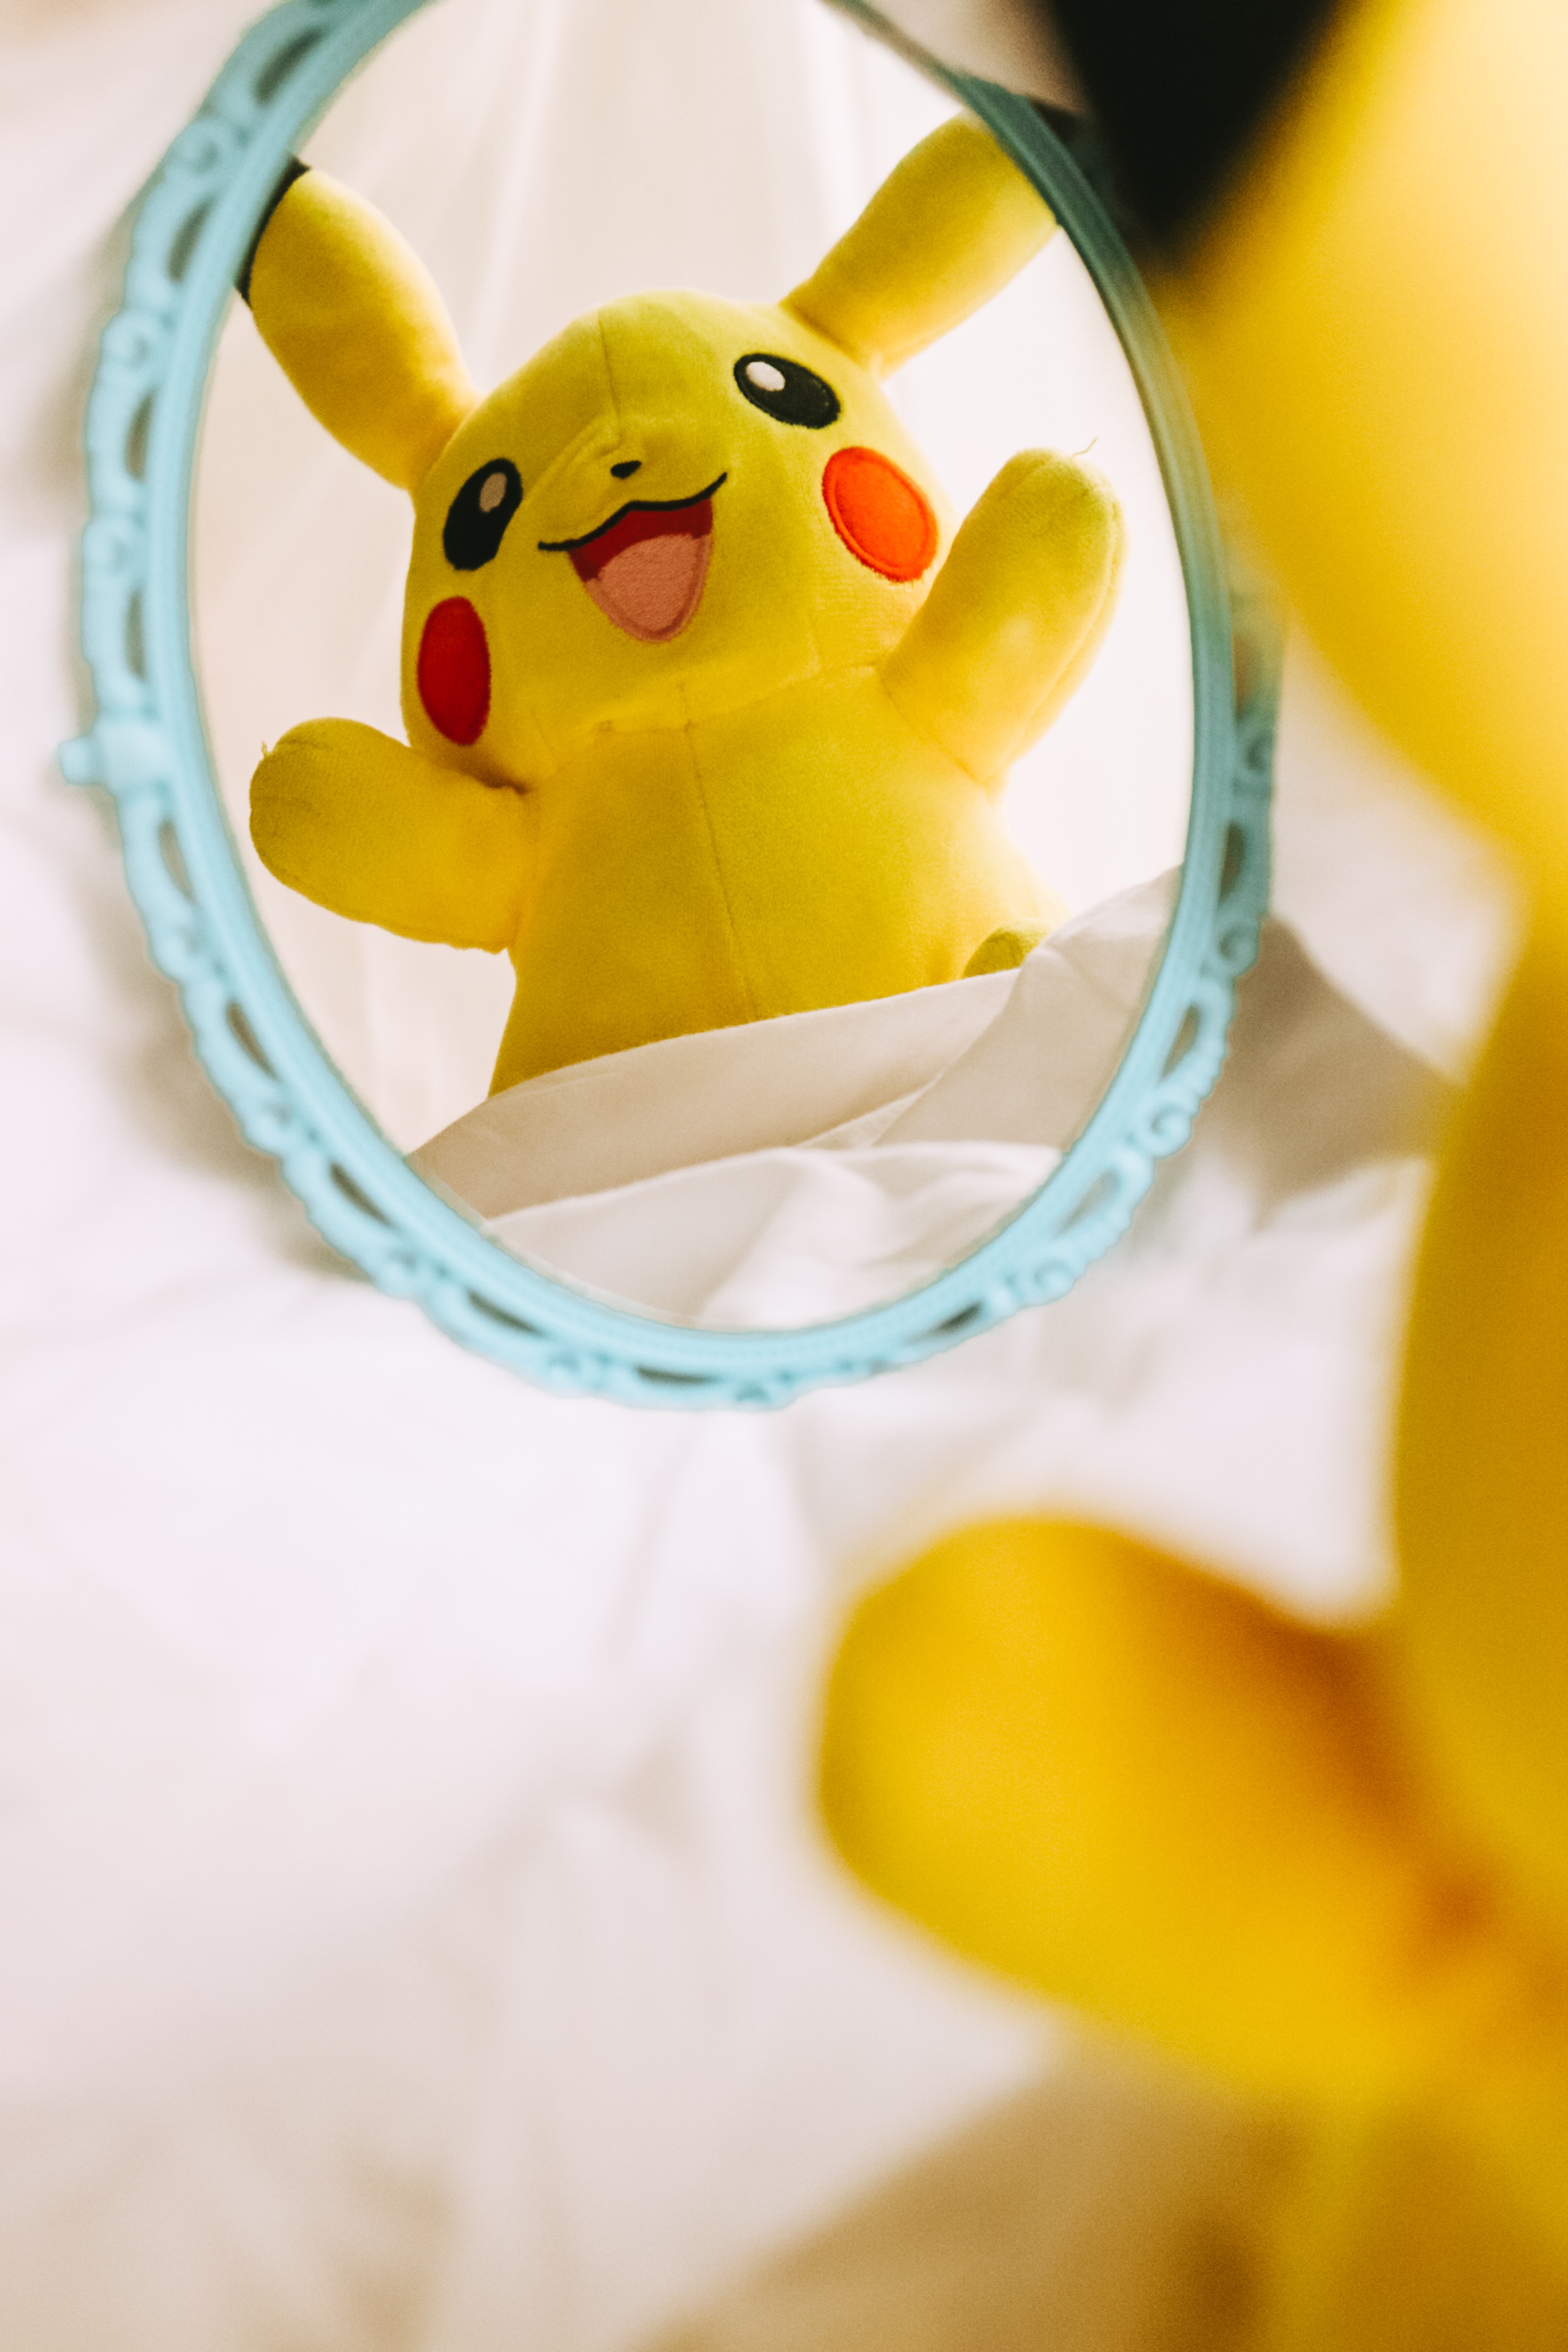 Sad Pikachu Wallpapers